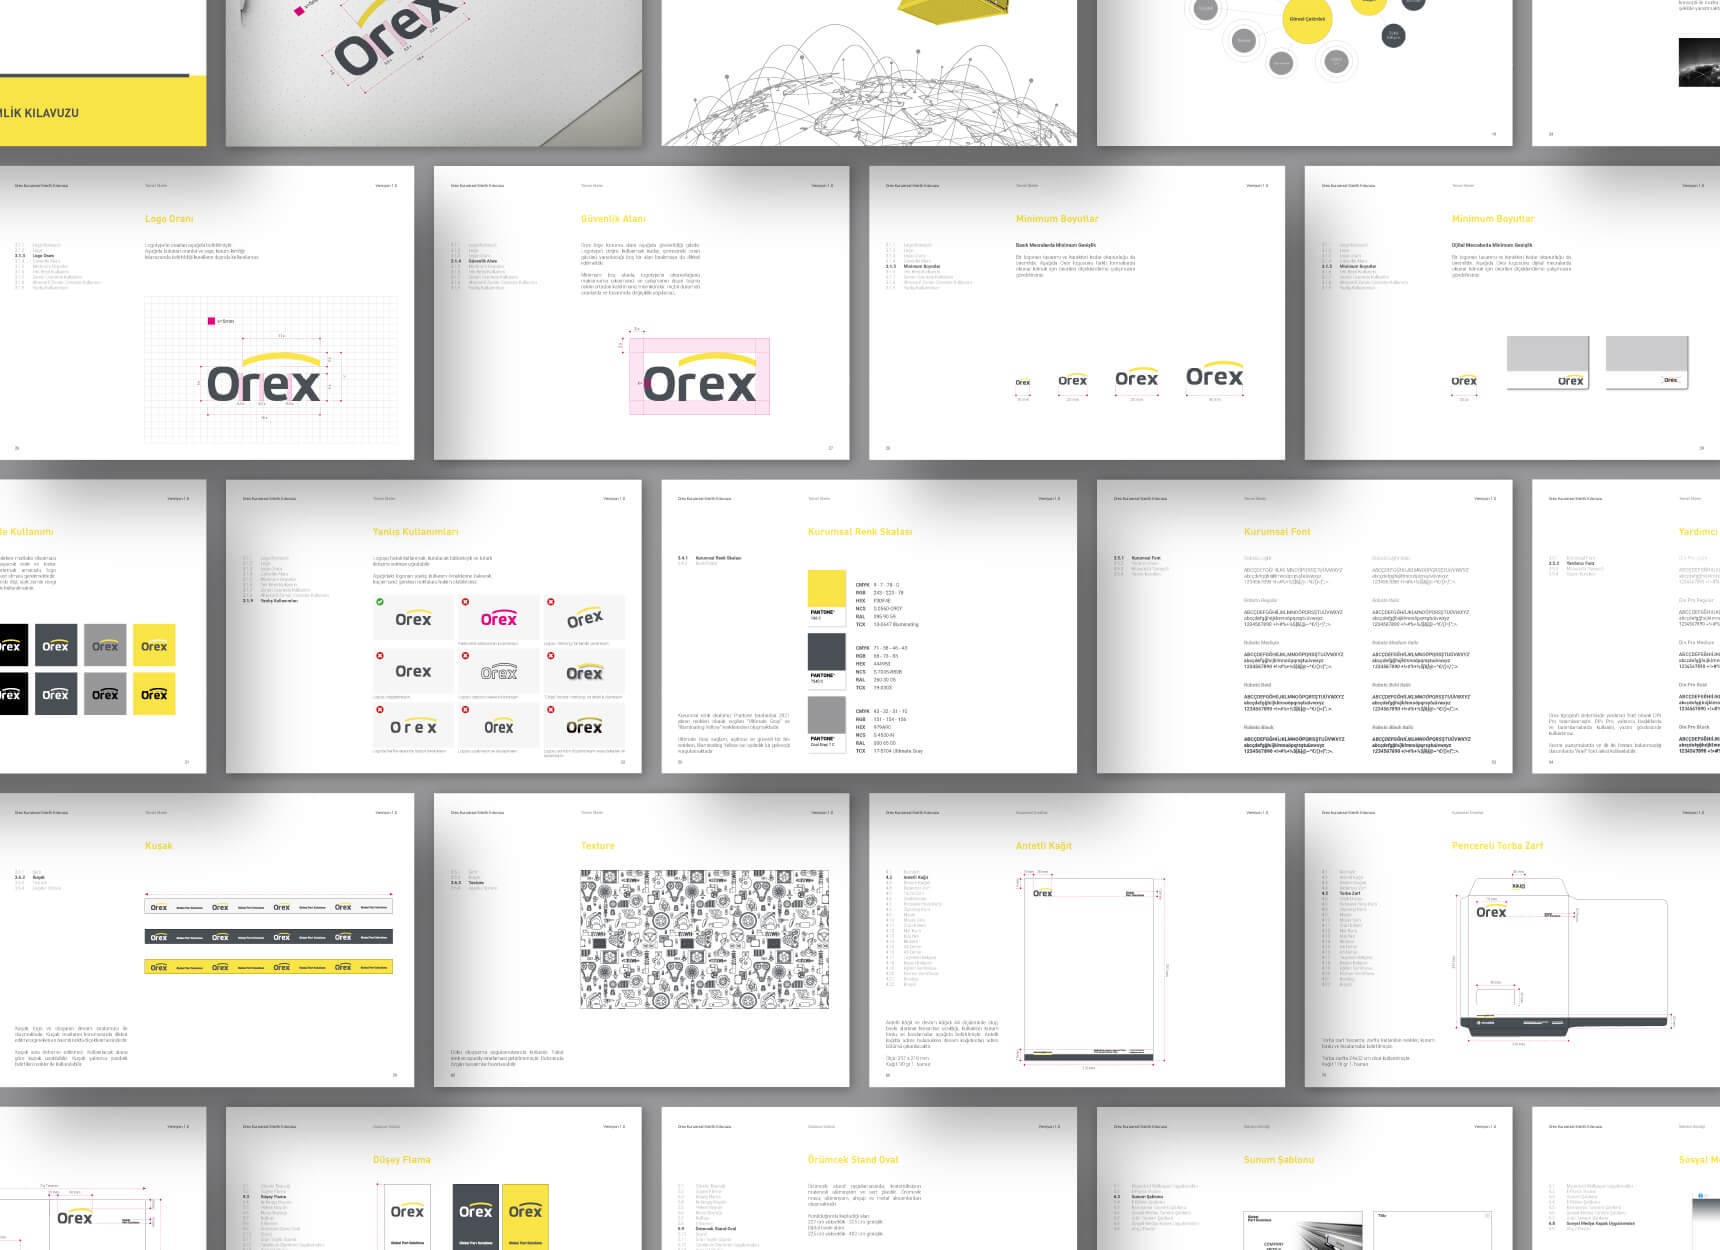 Orex-2 - wrinting 1-3 - brand video-5 - logo part-6 - brand book mockup